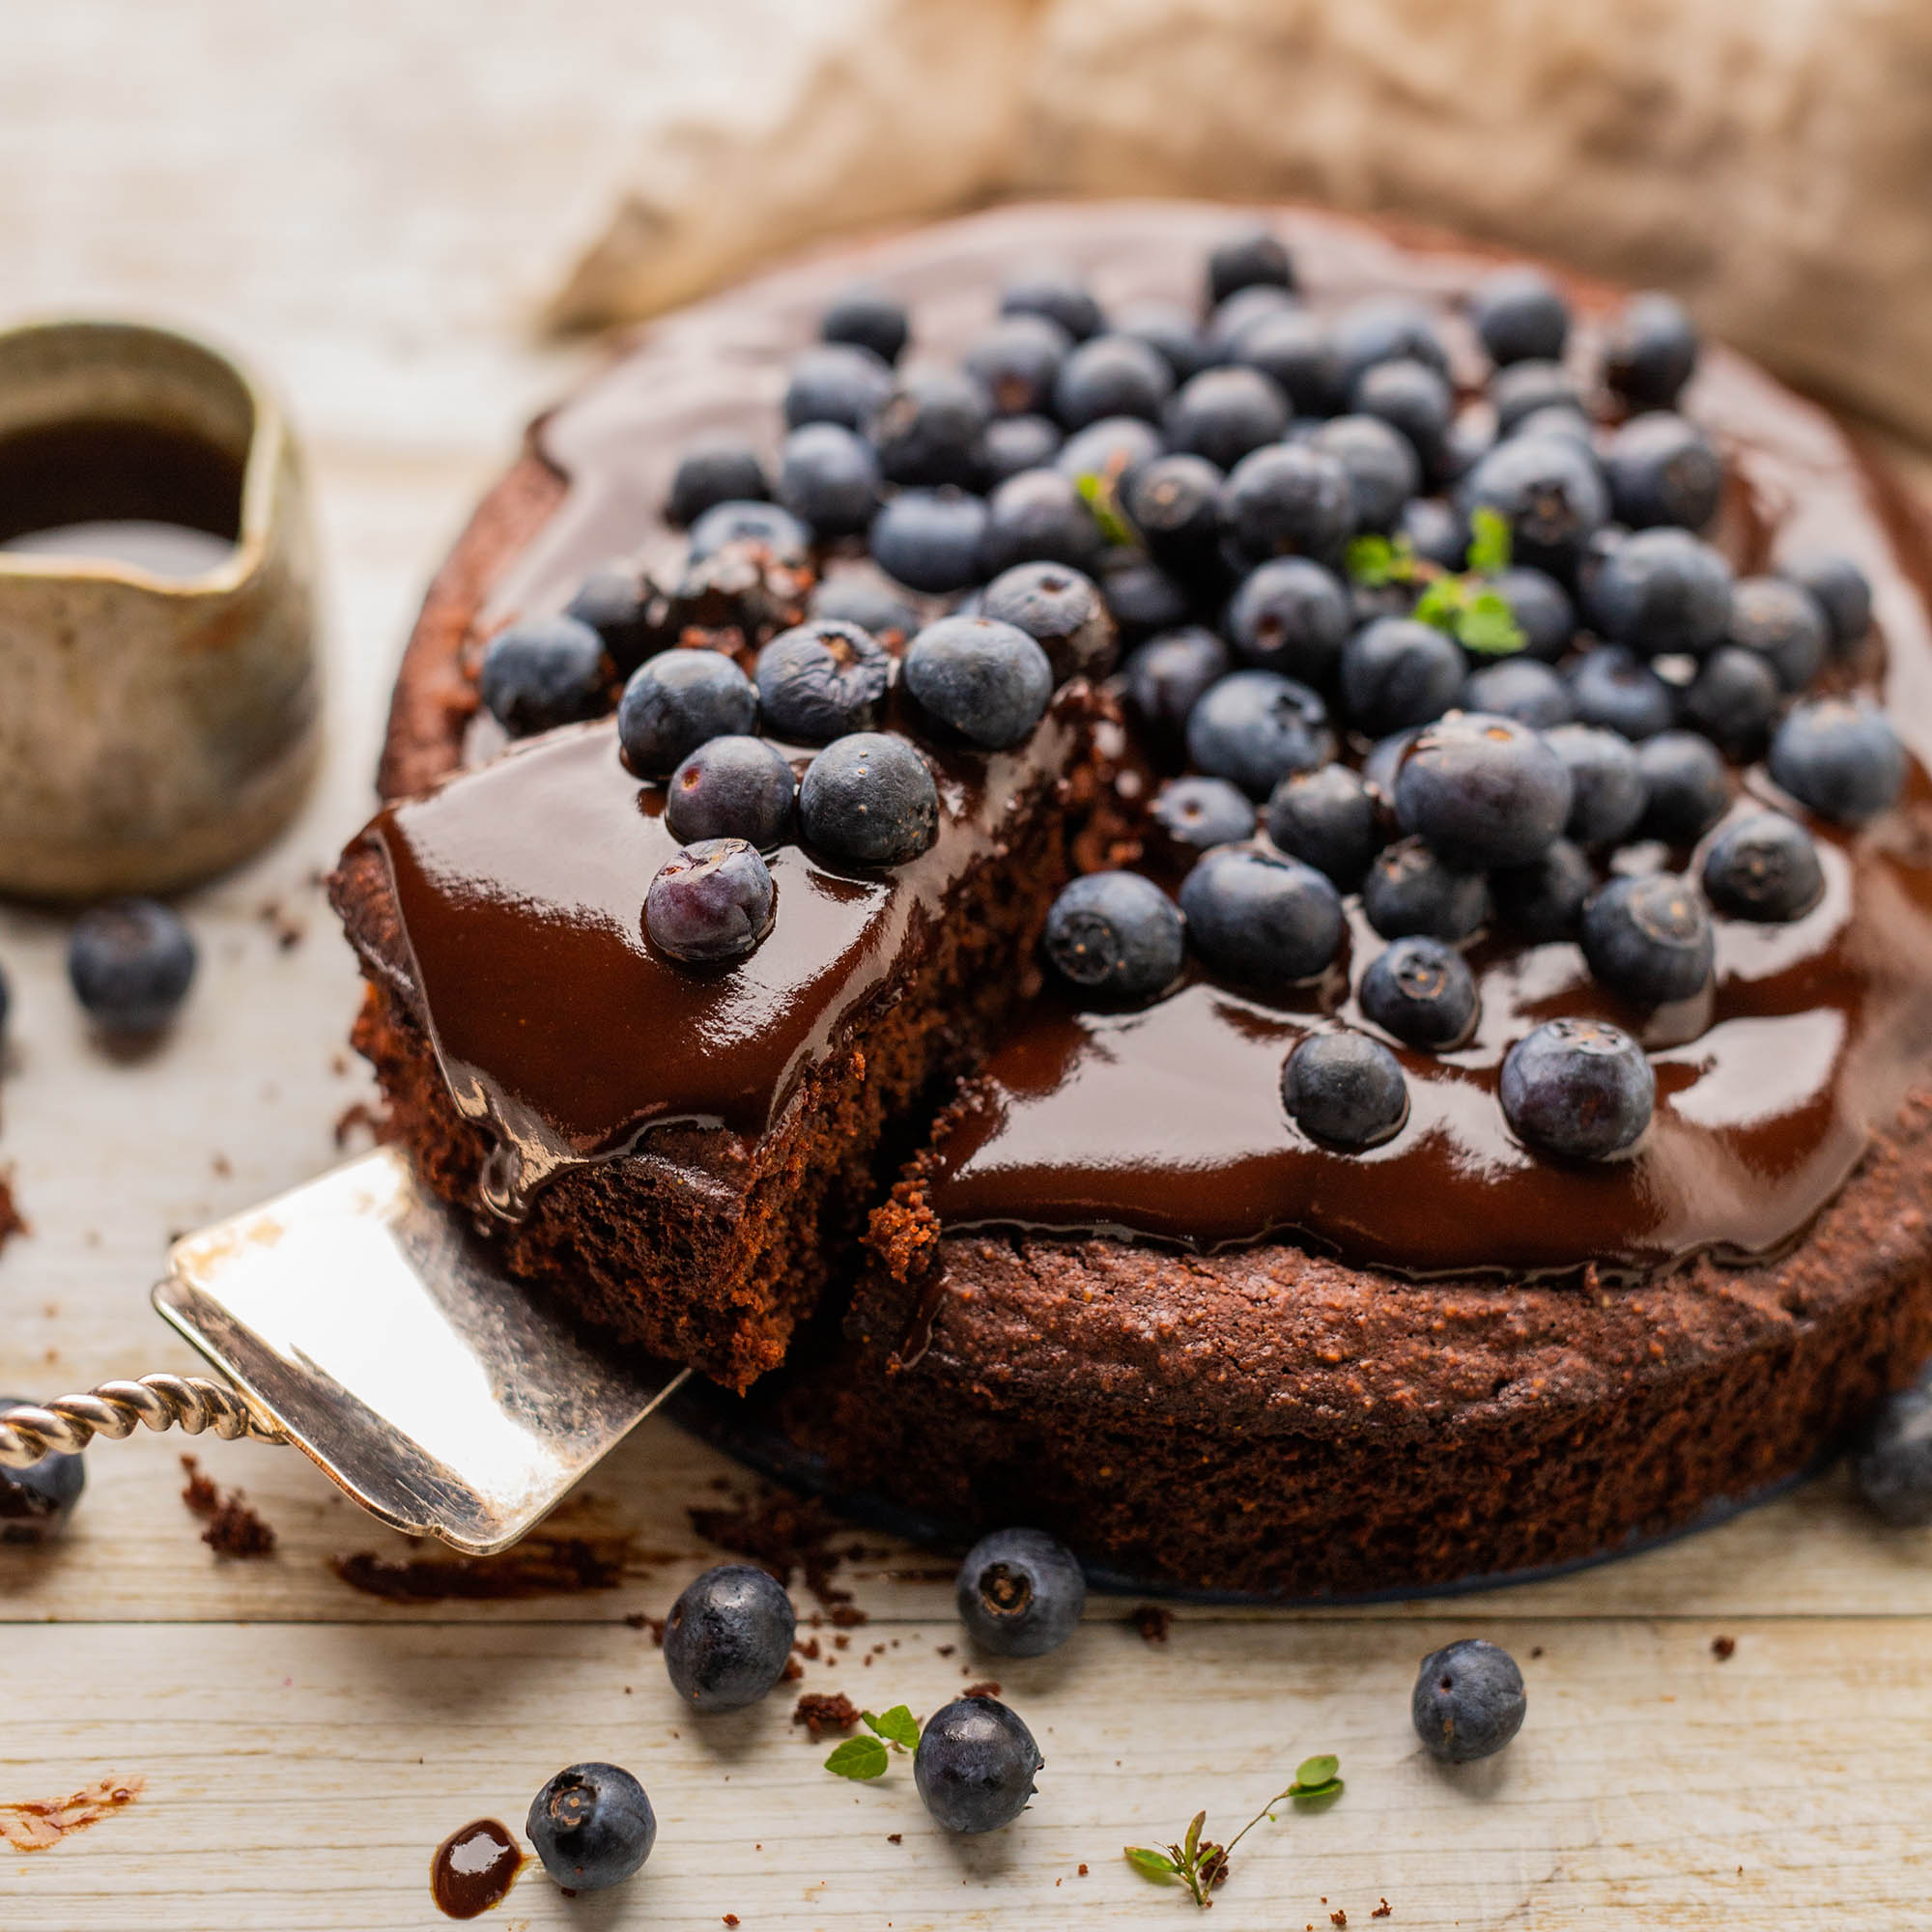 Healthy Vegan Chocolate Mud Cake with Avocado Oil